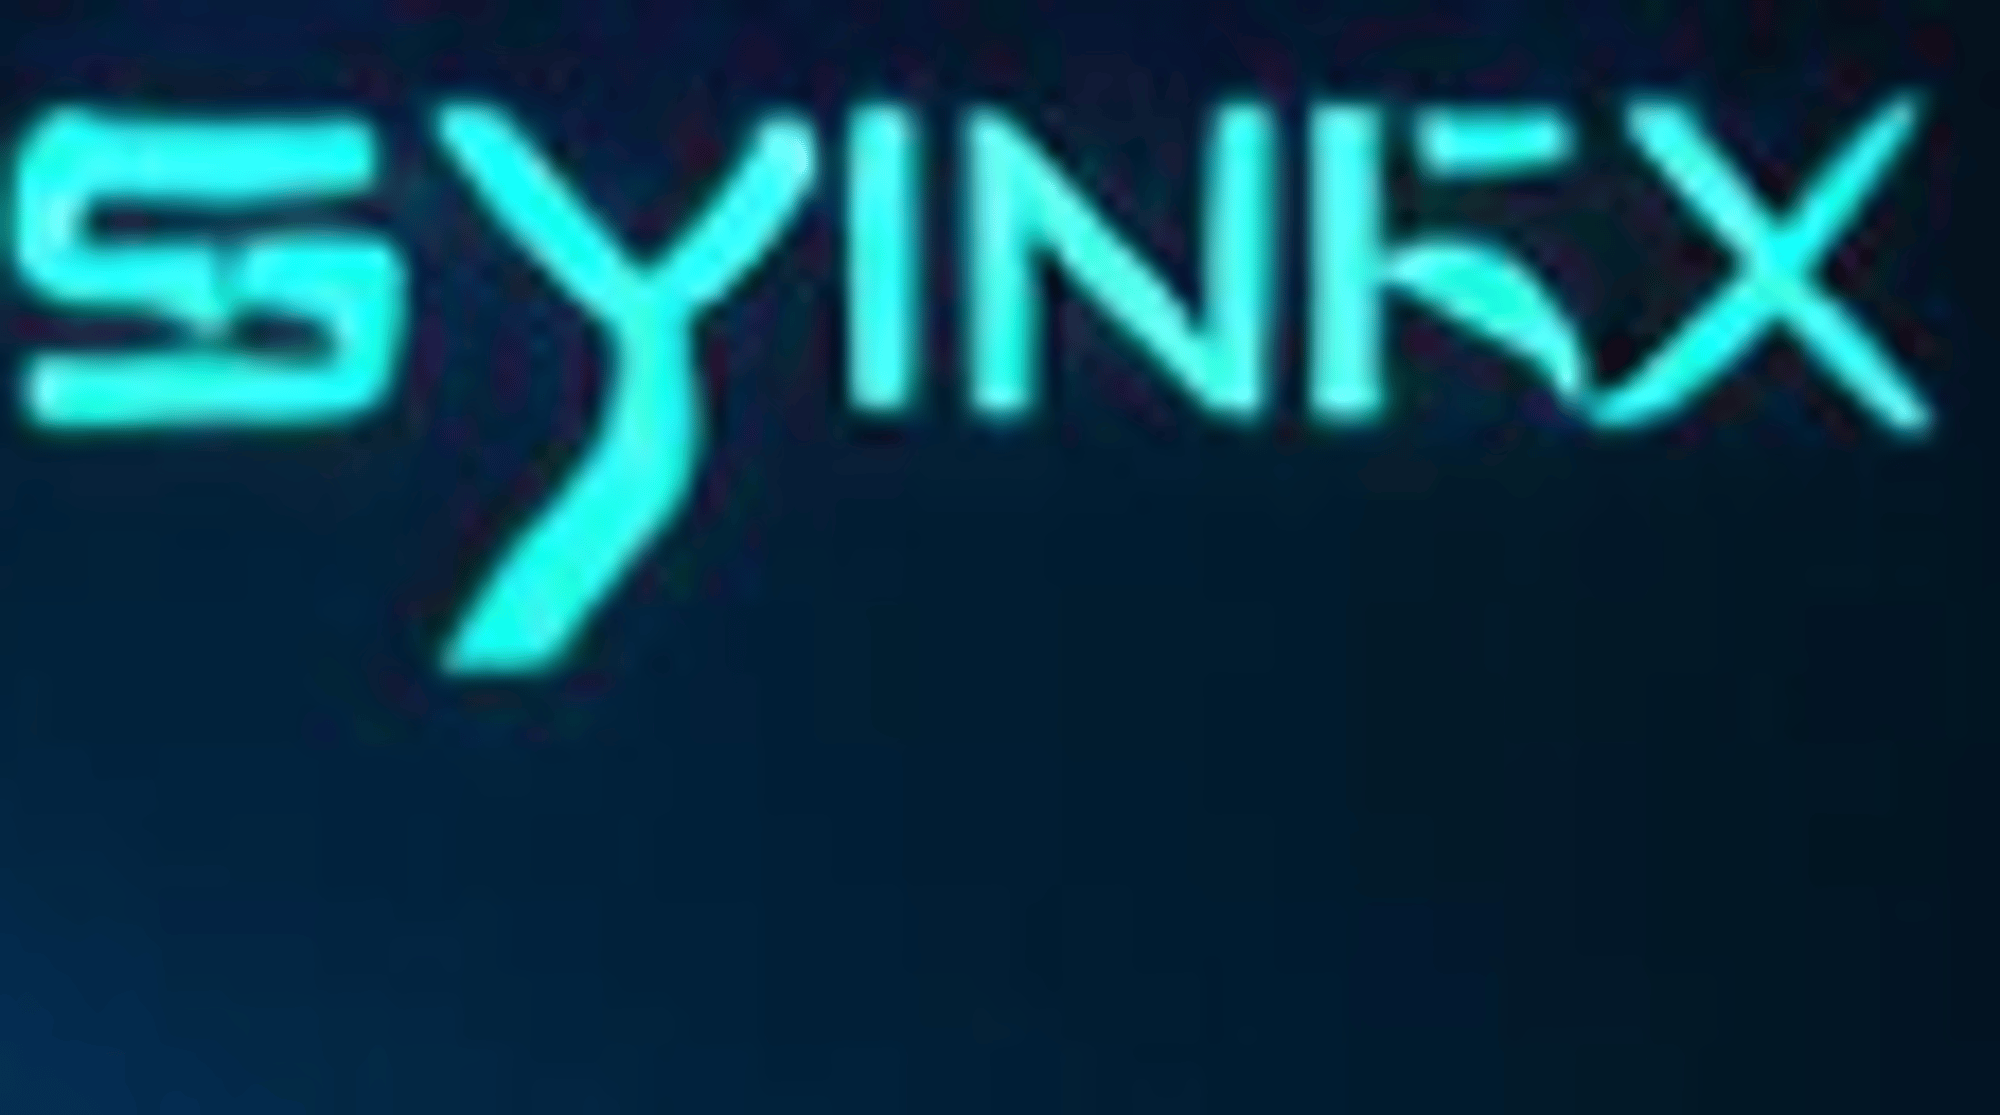 SynthEx.AI